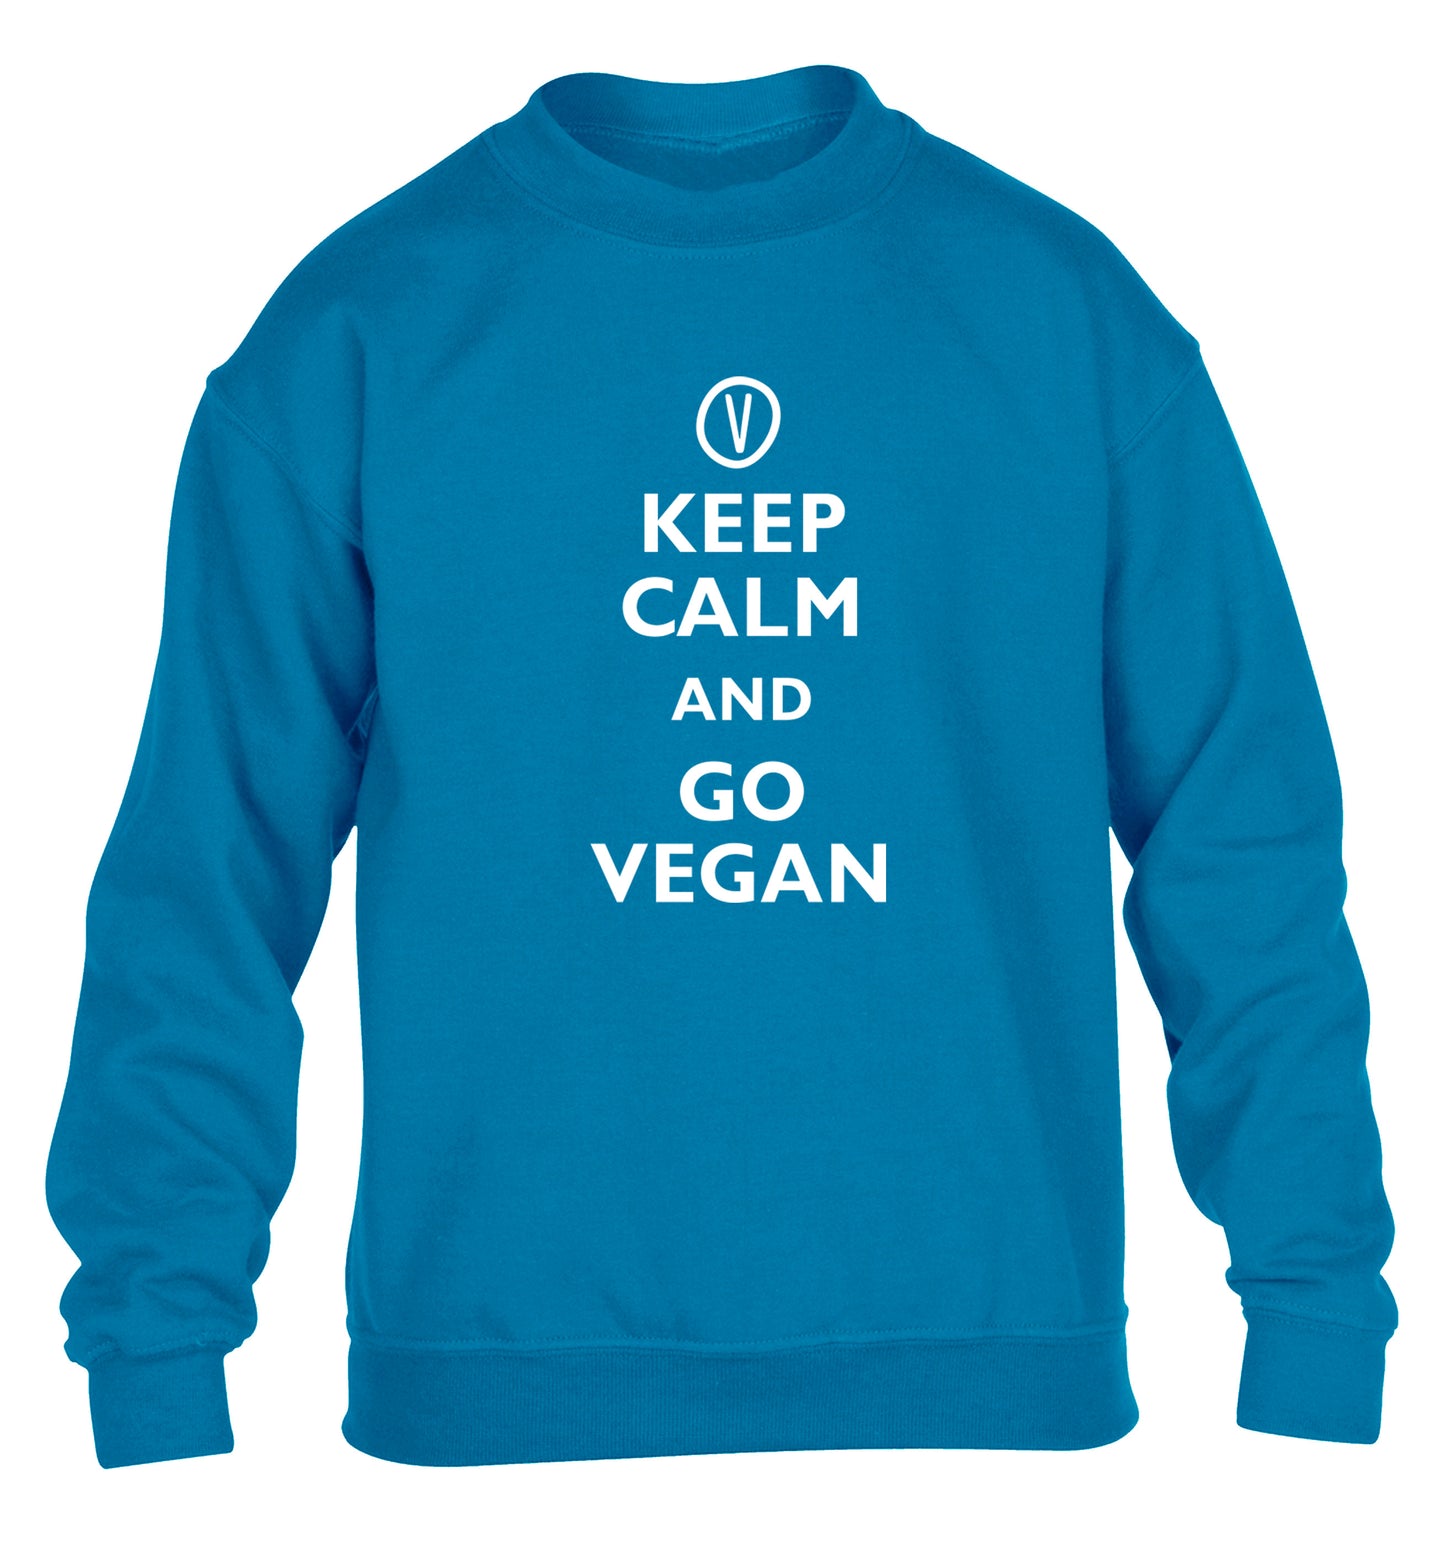 Keep calm and go vegan children's blue sweater 12-13 Years